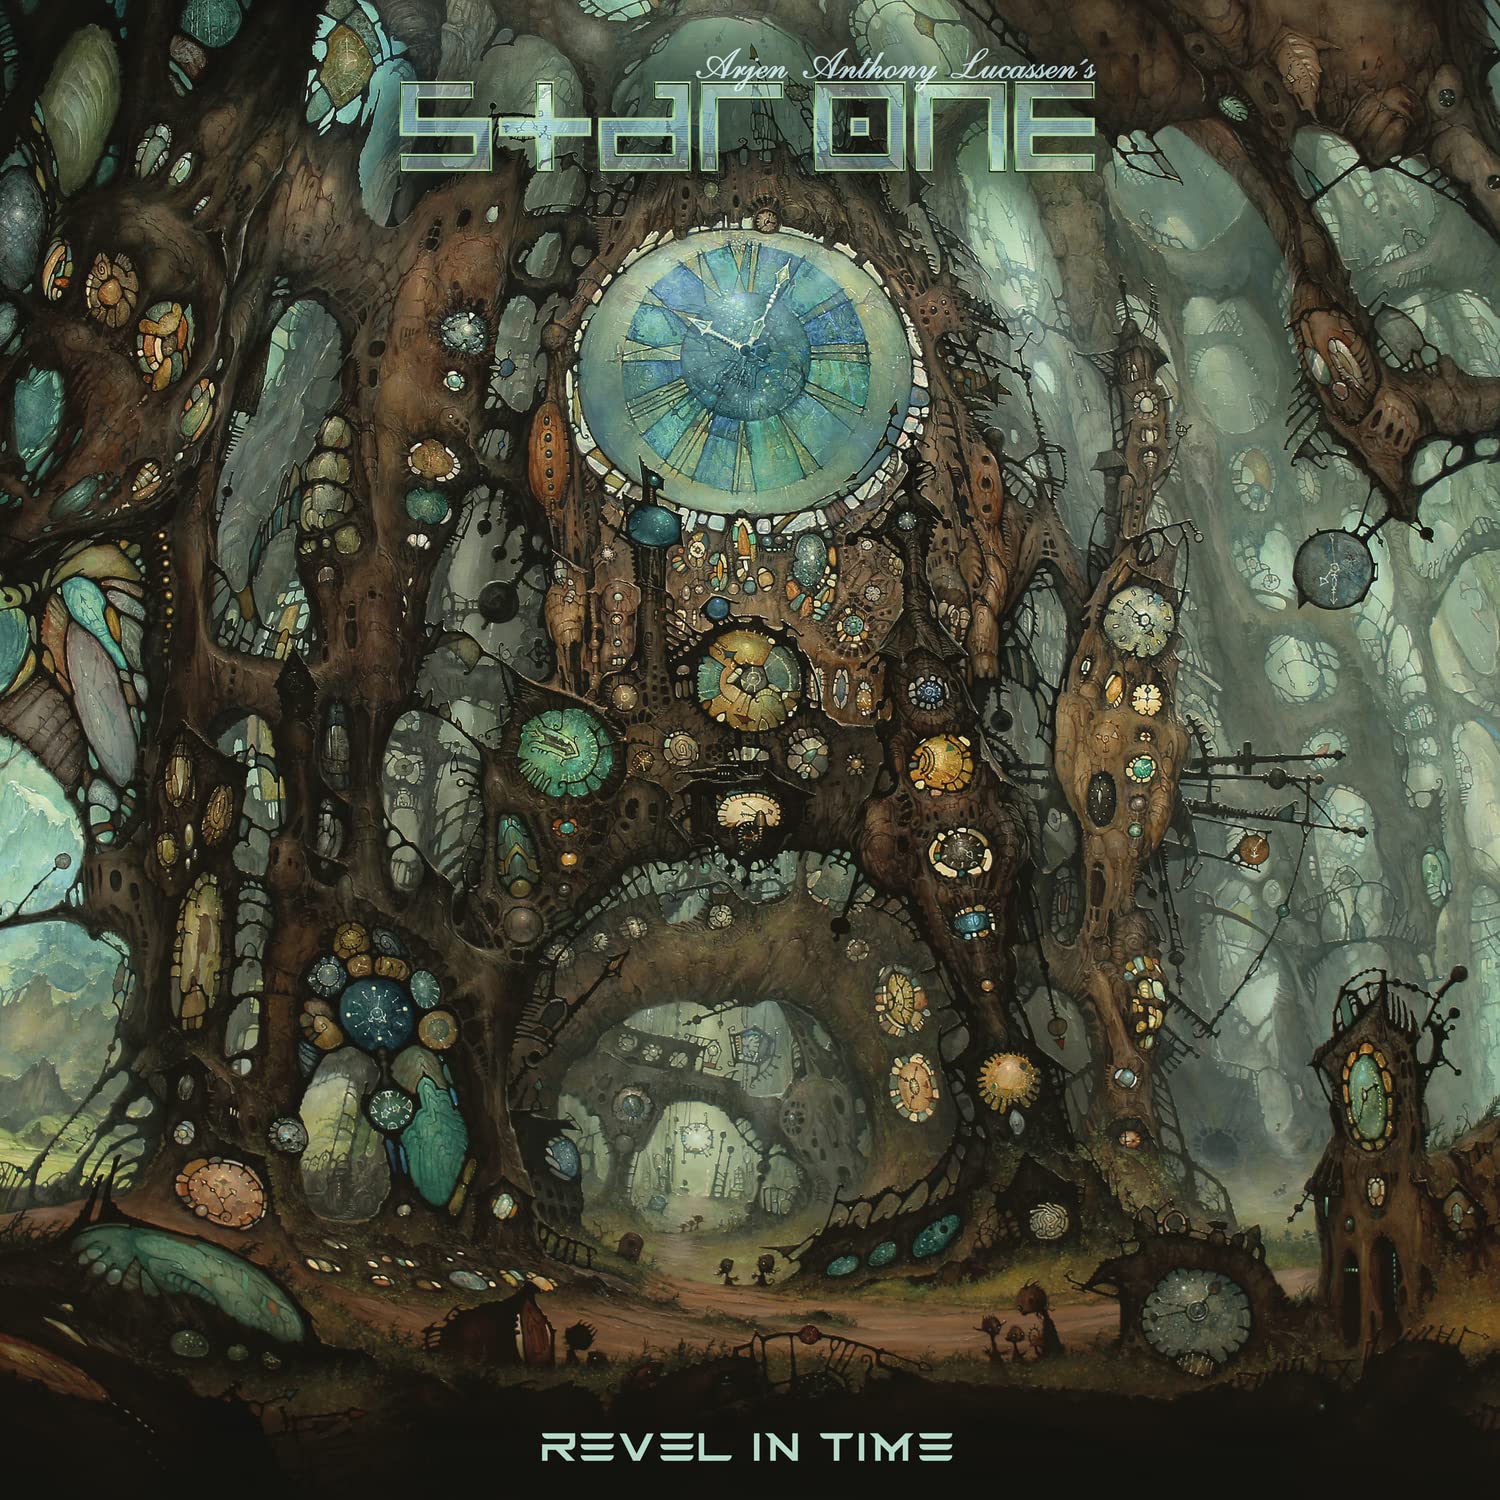 Star One - Revel In Time (Special Ed. 2CD digipak) - CD - New